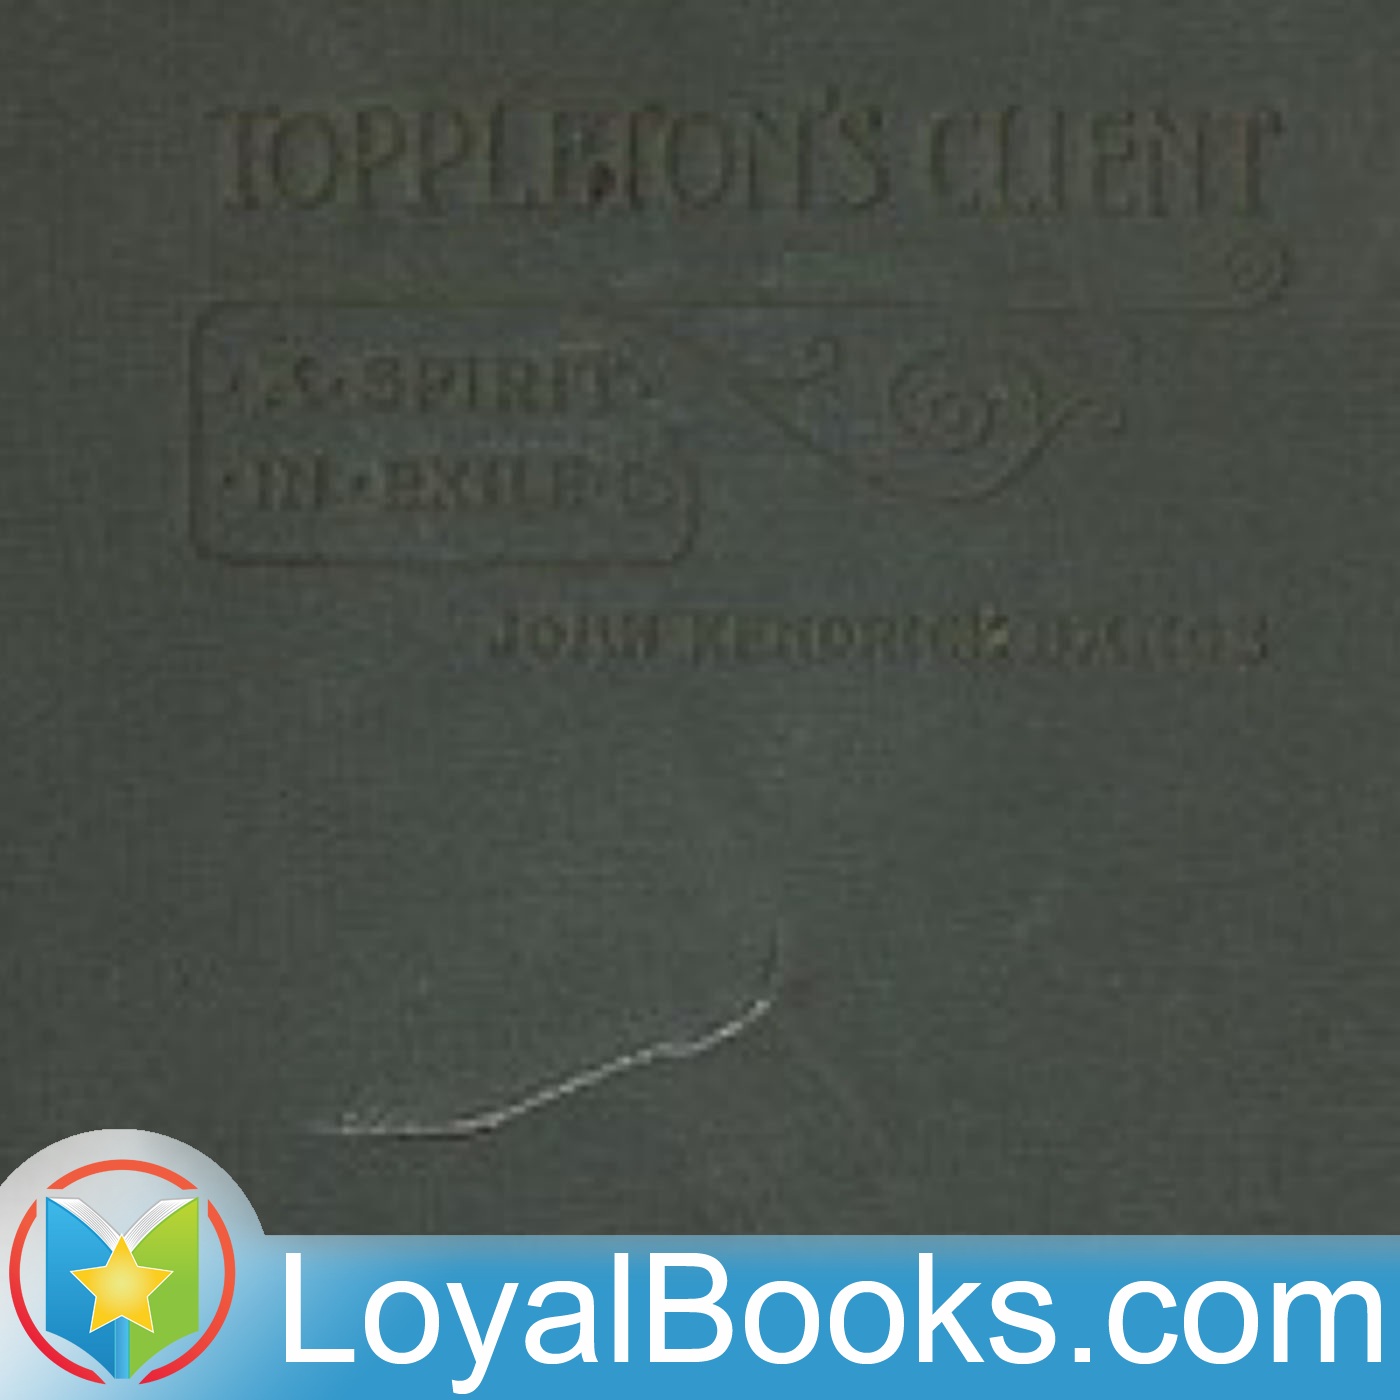 Toppleton's Client by John Kendrick Bangs